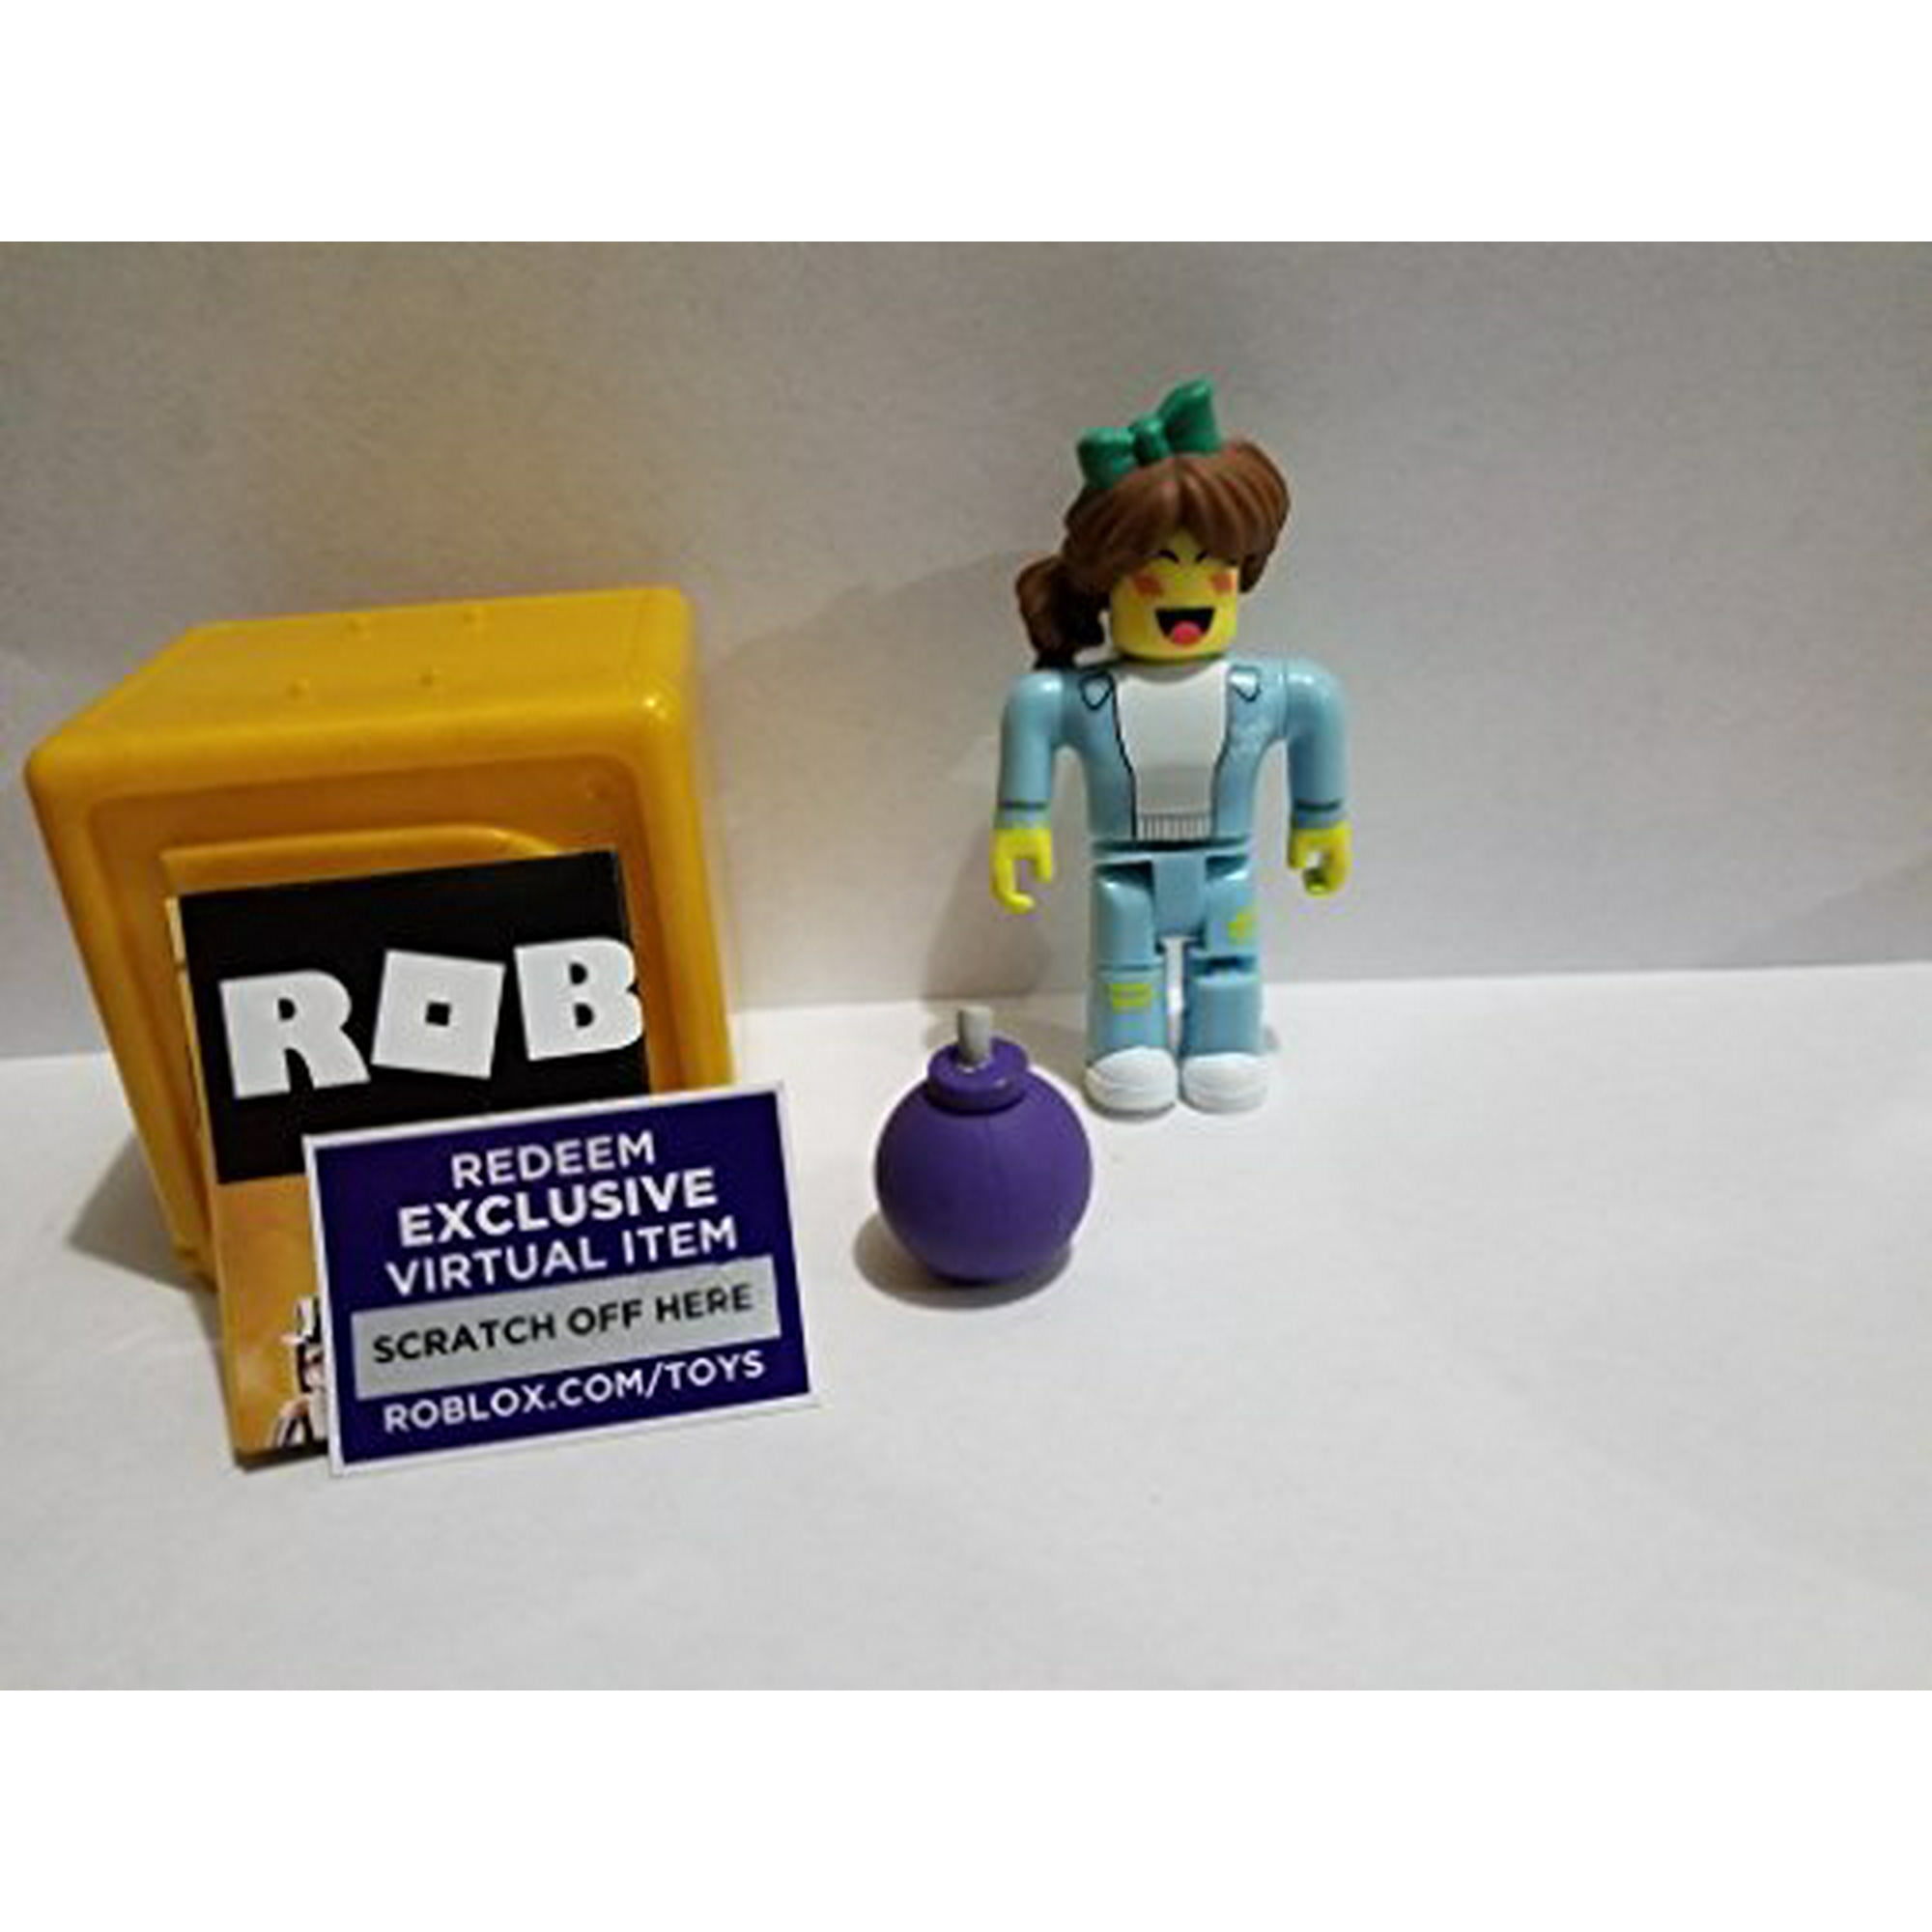 Roblox Gold Celebrity Series Super Bomb Survival Shopgirl Action Figure Mystery Box Virtual Item Code 2 5 Walmart Canada - gold roblox visor roblox